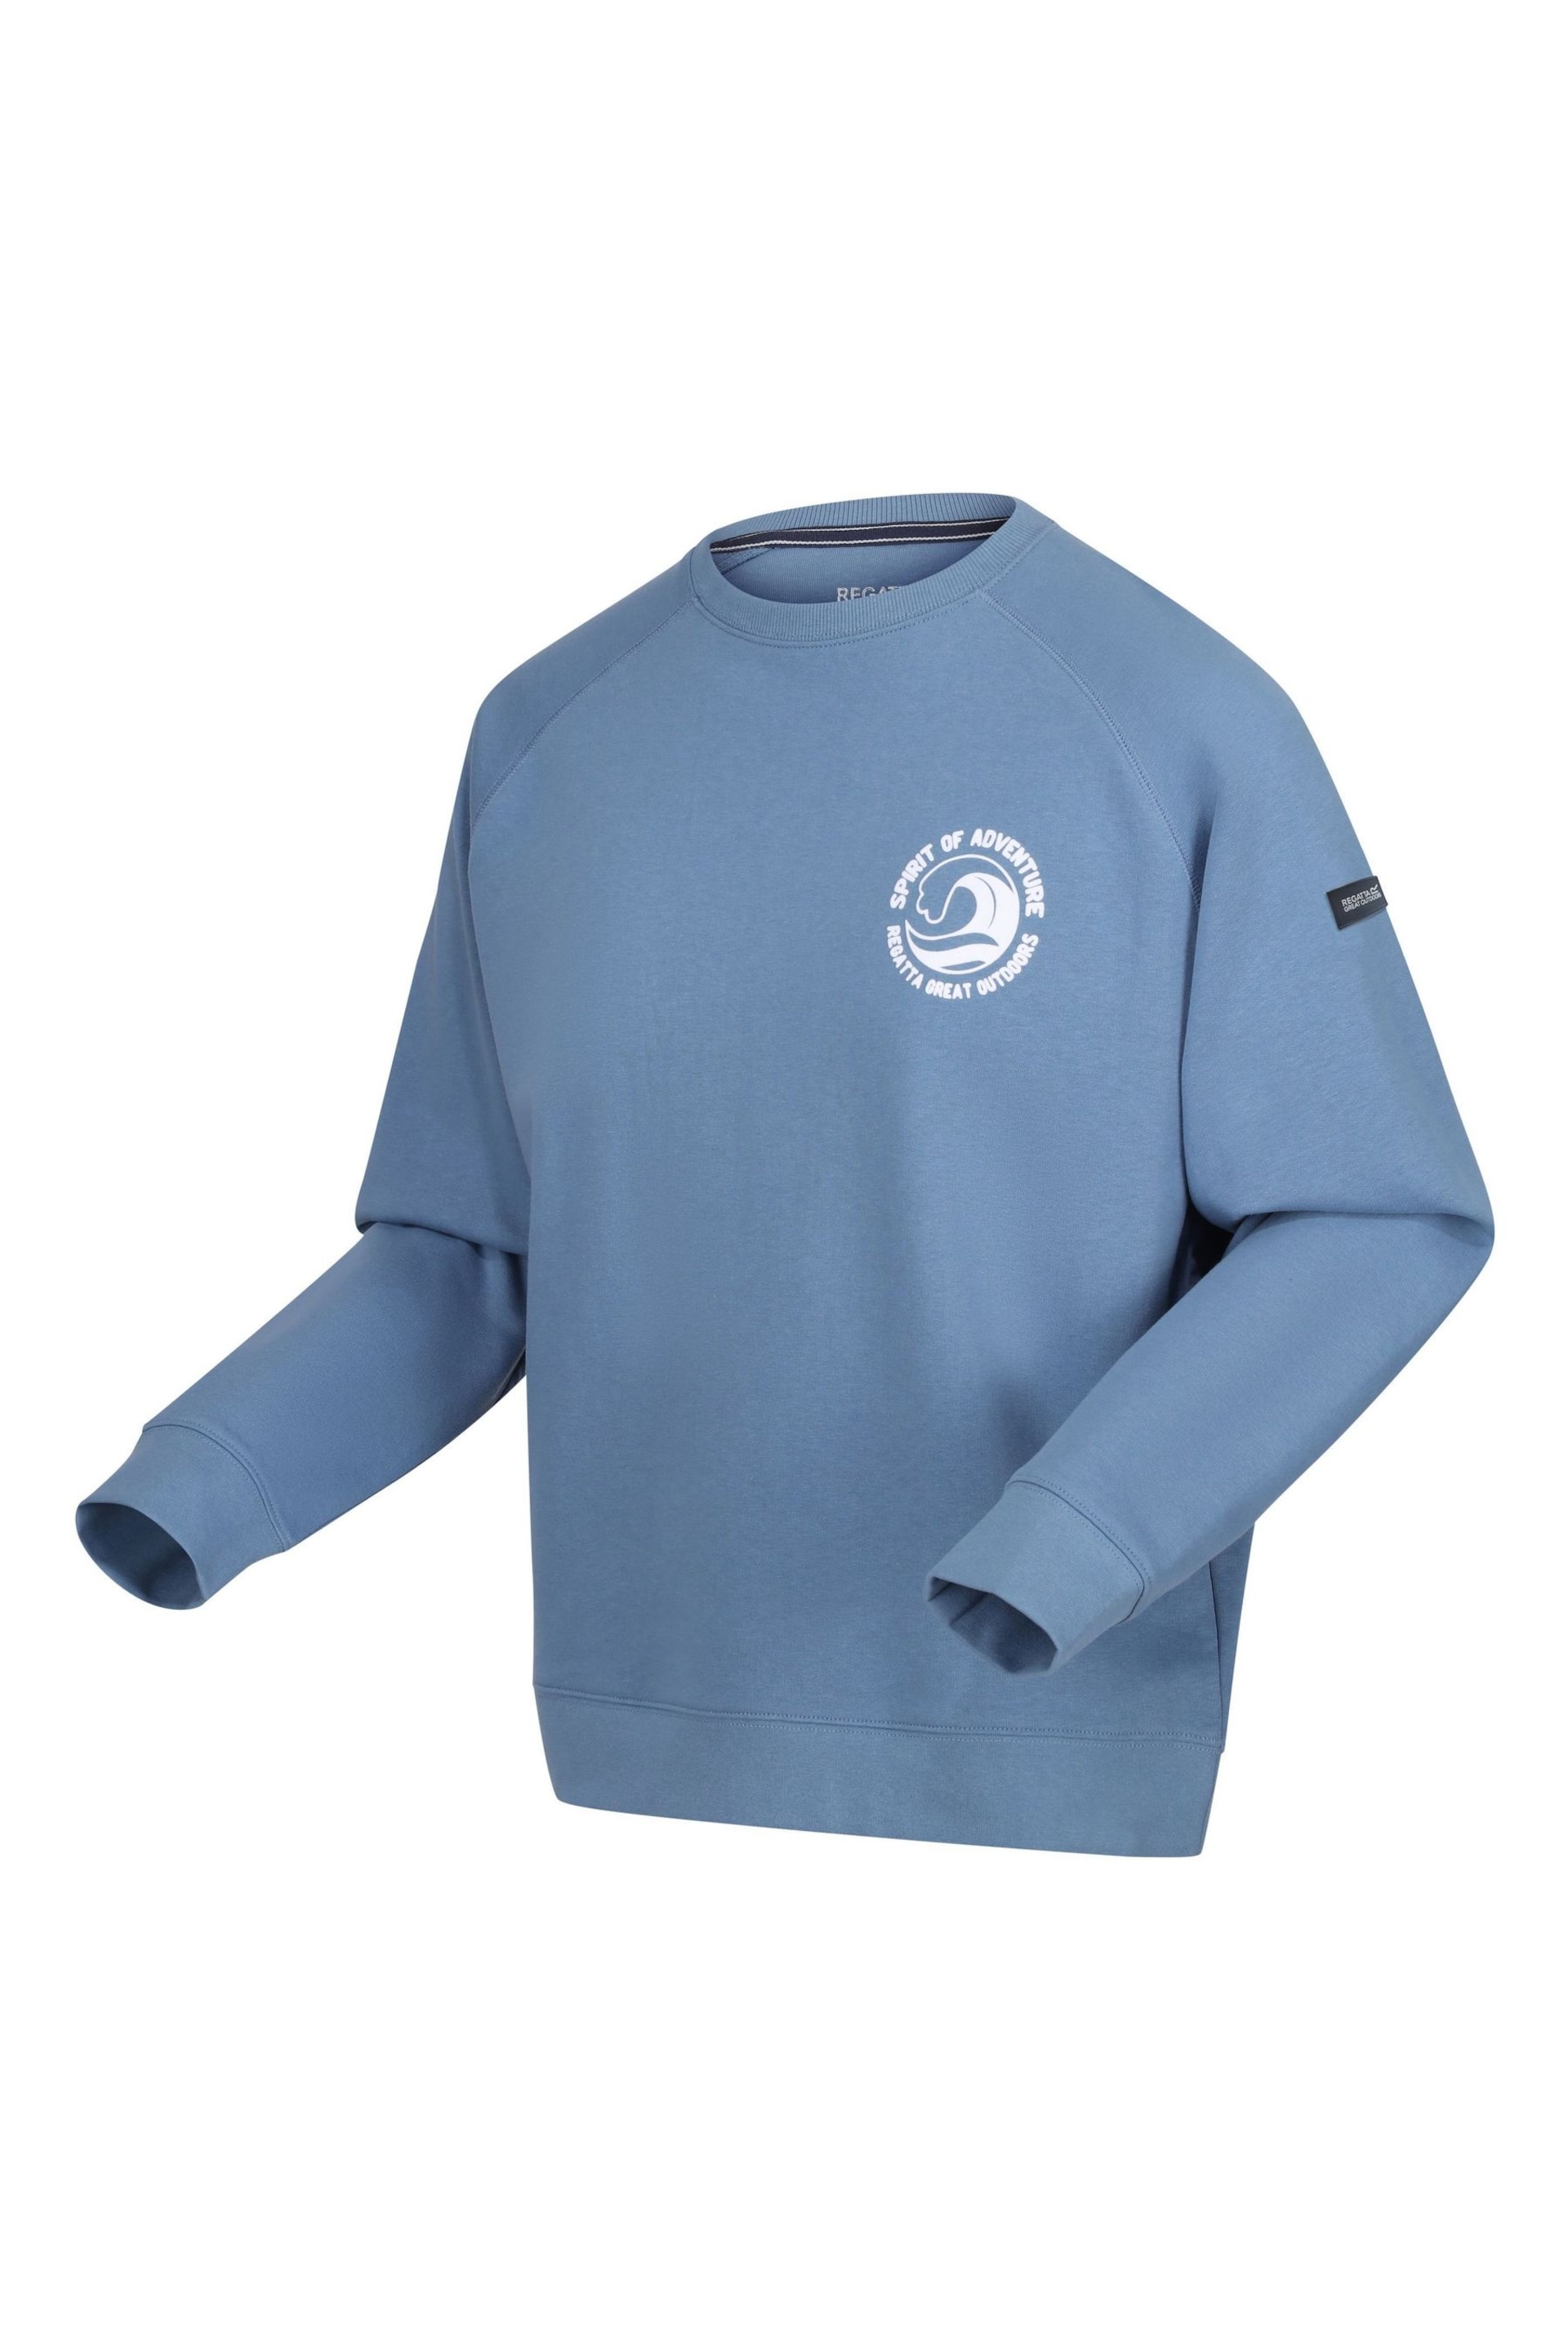 Regatta Blue Nithsdale Sweater - Image 9 of 9